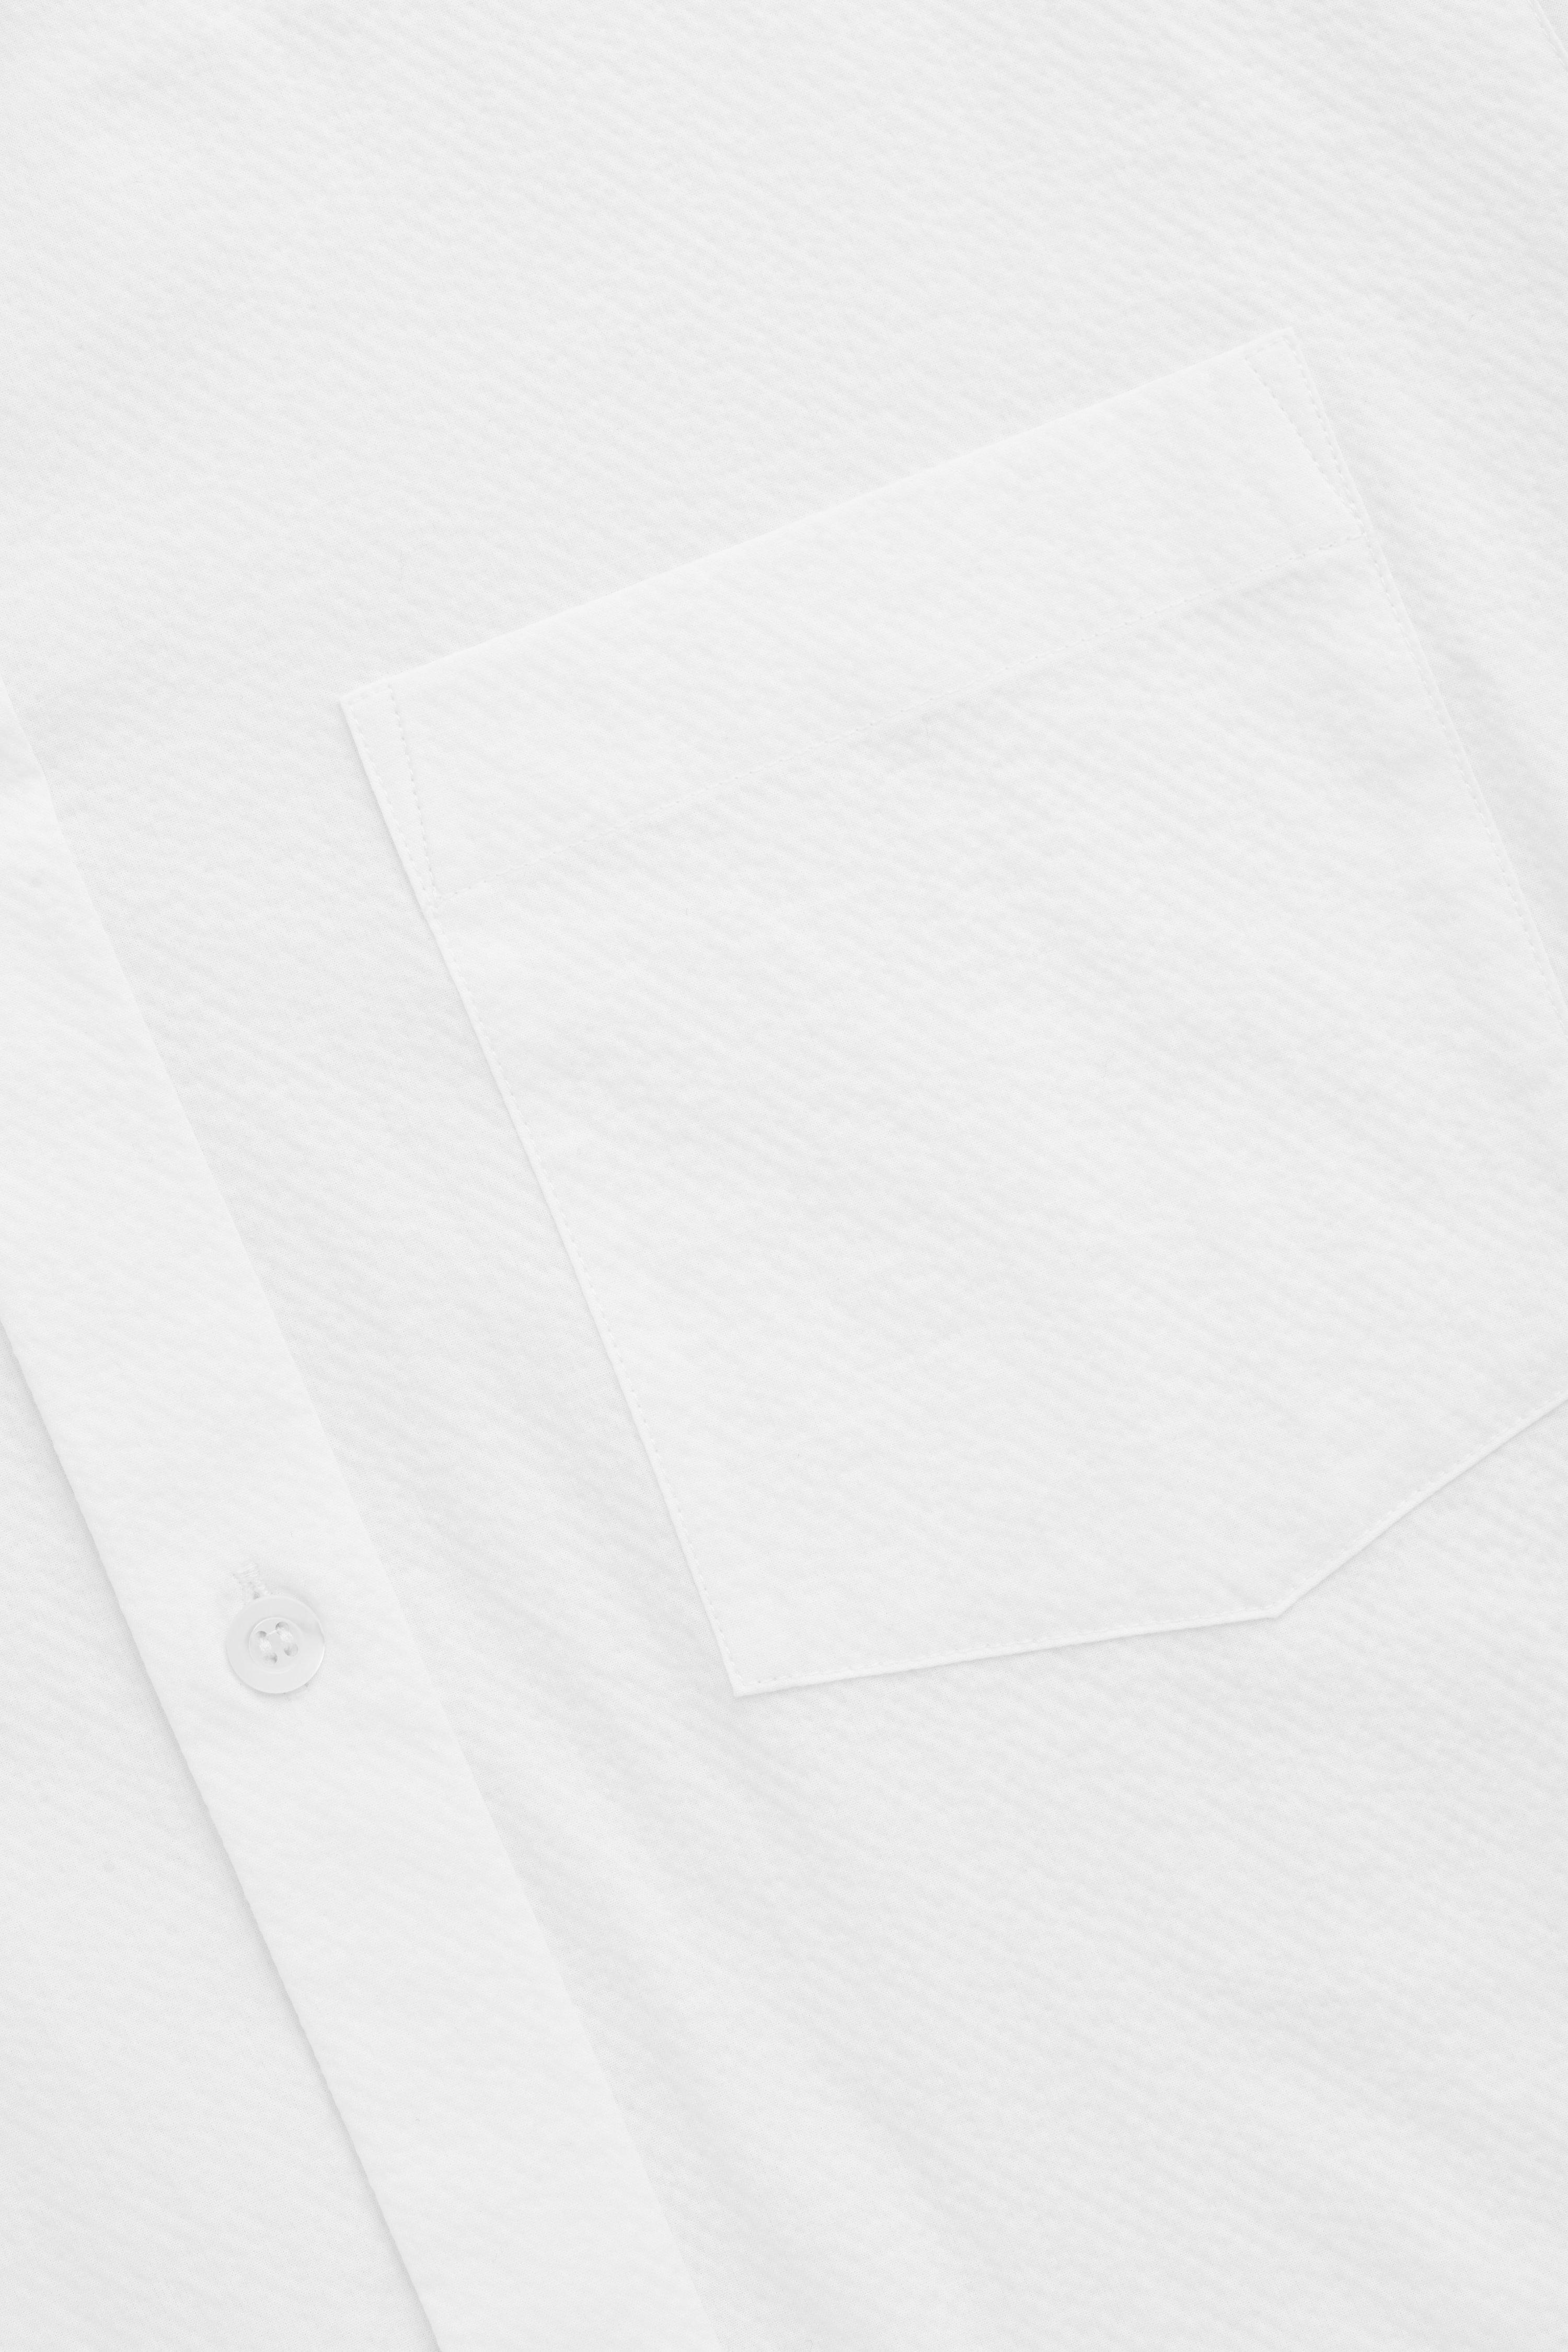 COS 推出全新 White Shirt Project 系列